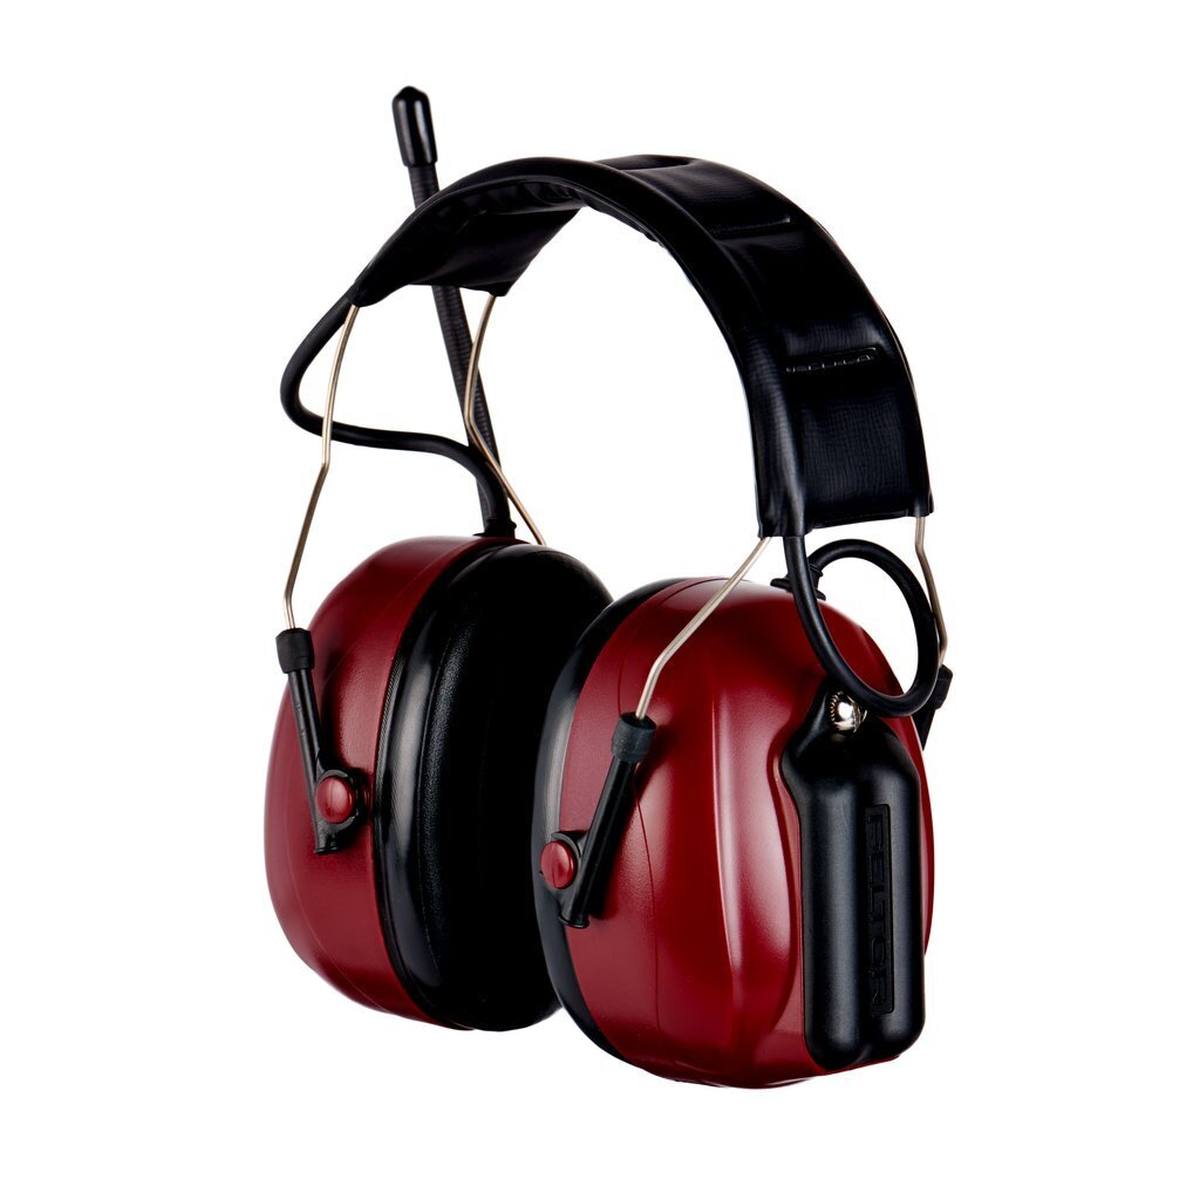 3M PELTOR Protection auditive Alert Radio avec serre-tête M2RX72A2